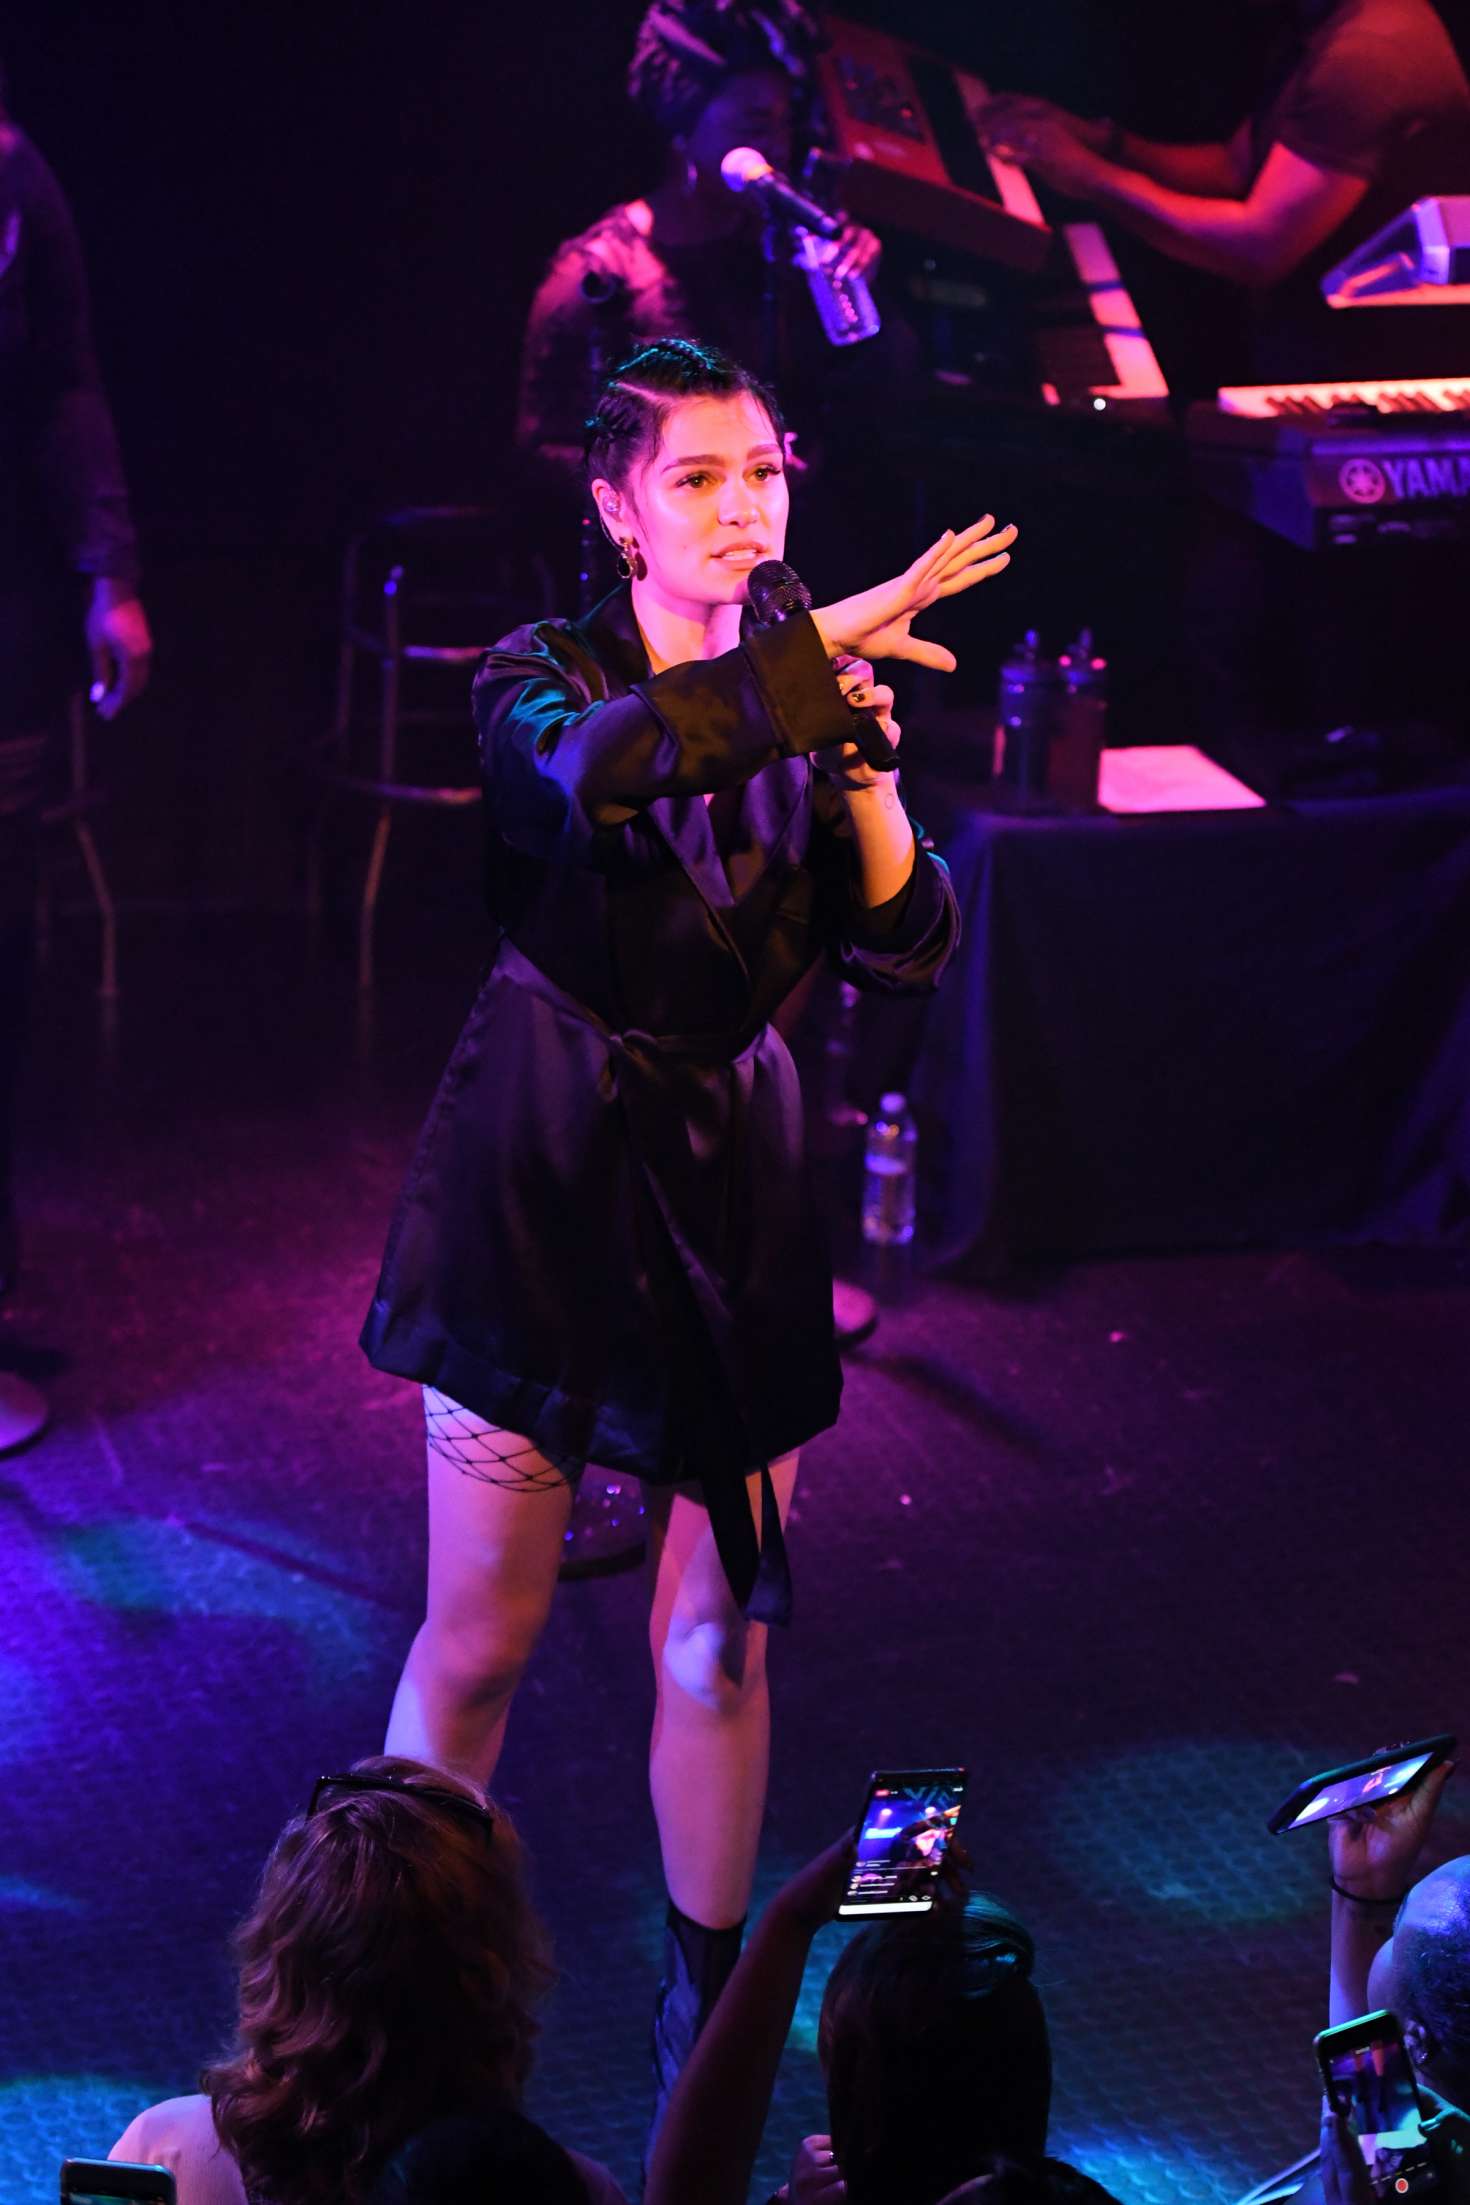 Jessie J - Preforms at the Troubadour Nightclub in Los Angeles